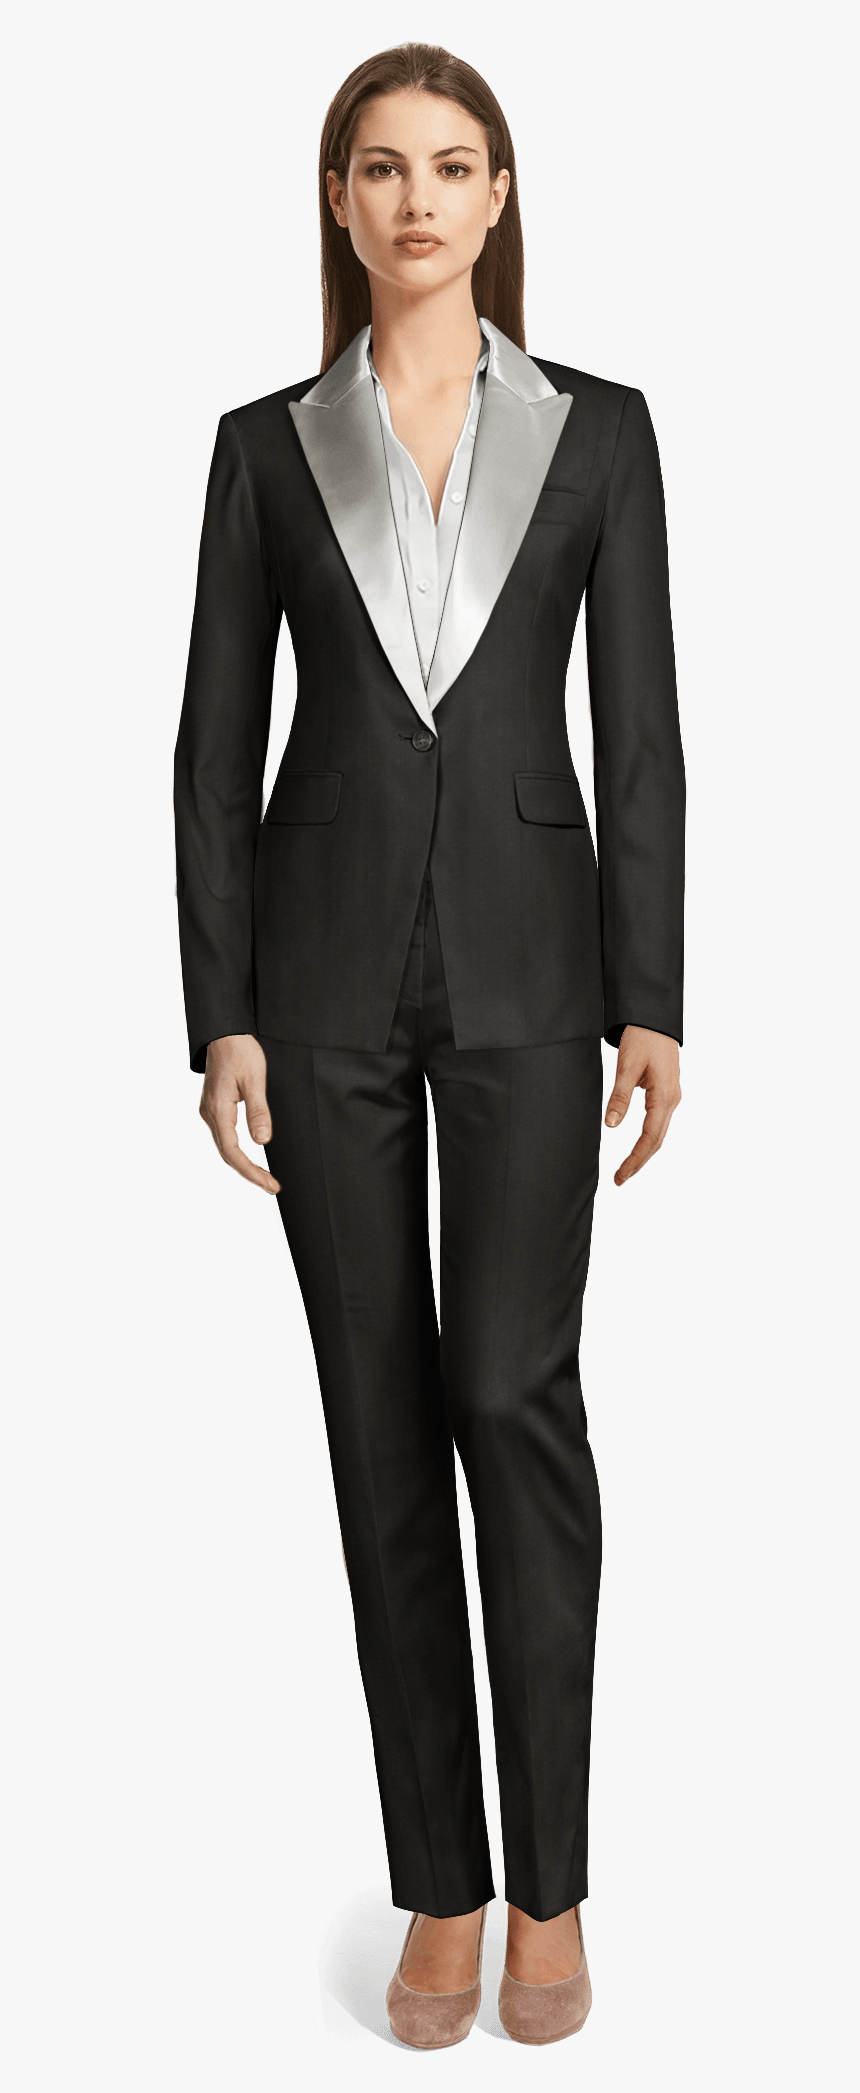 Blue Shiny Tuxedo With Peak White Lapels - Black Jacquard Women Suit, HD Png Download, Free Download